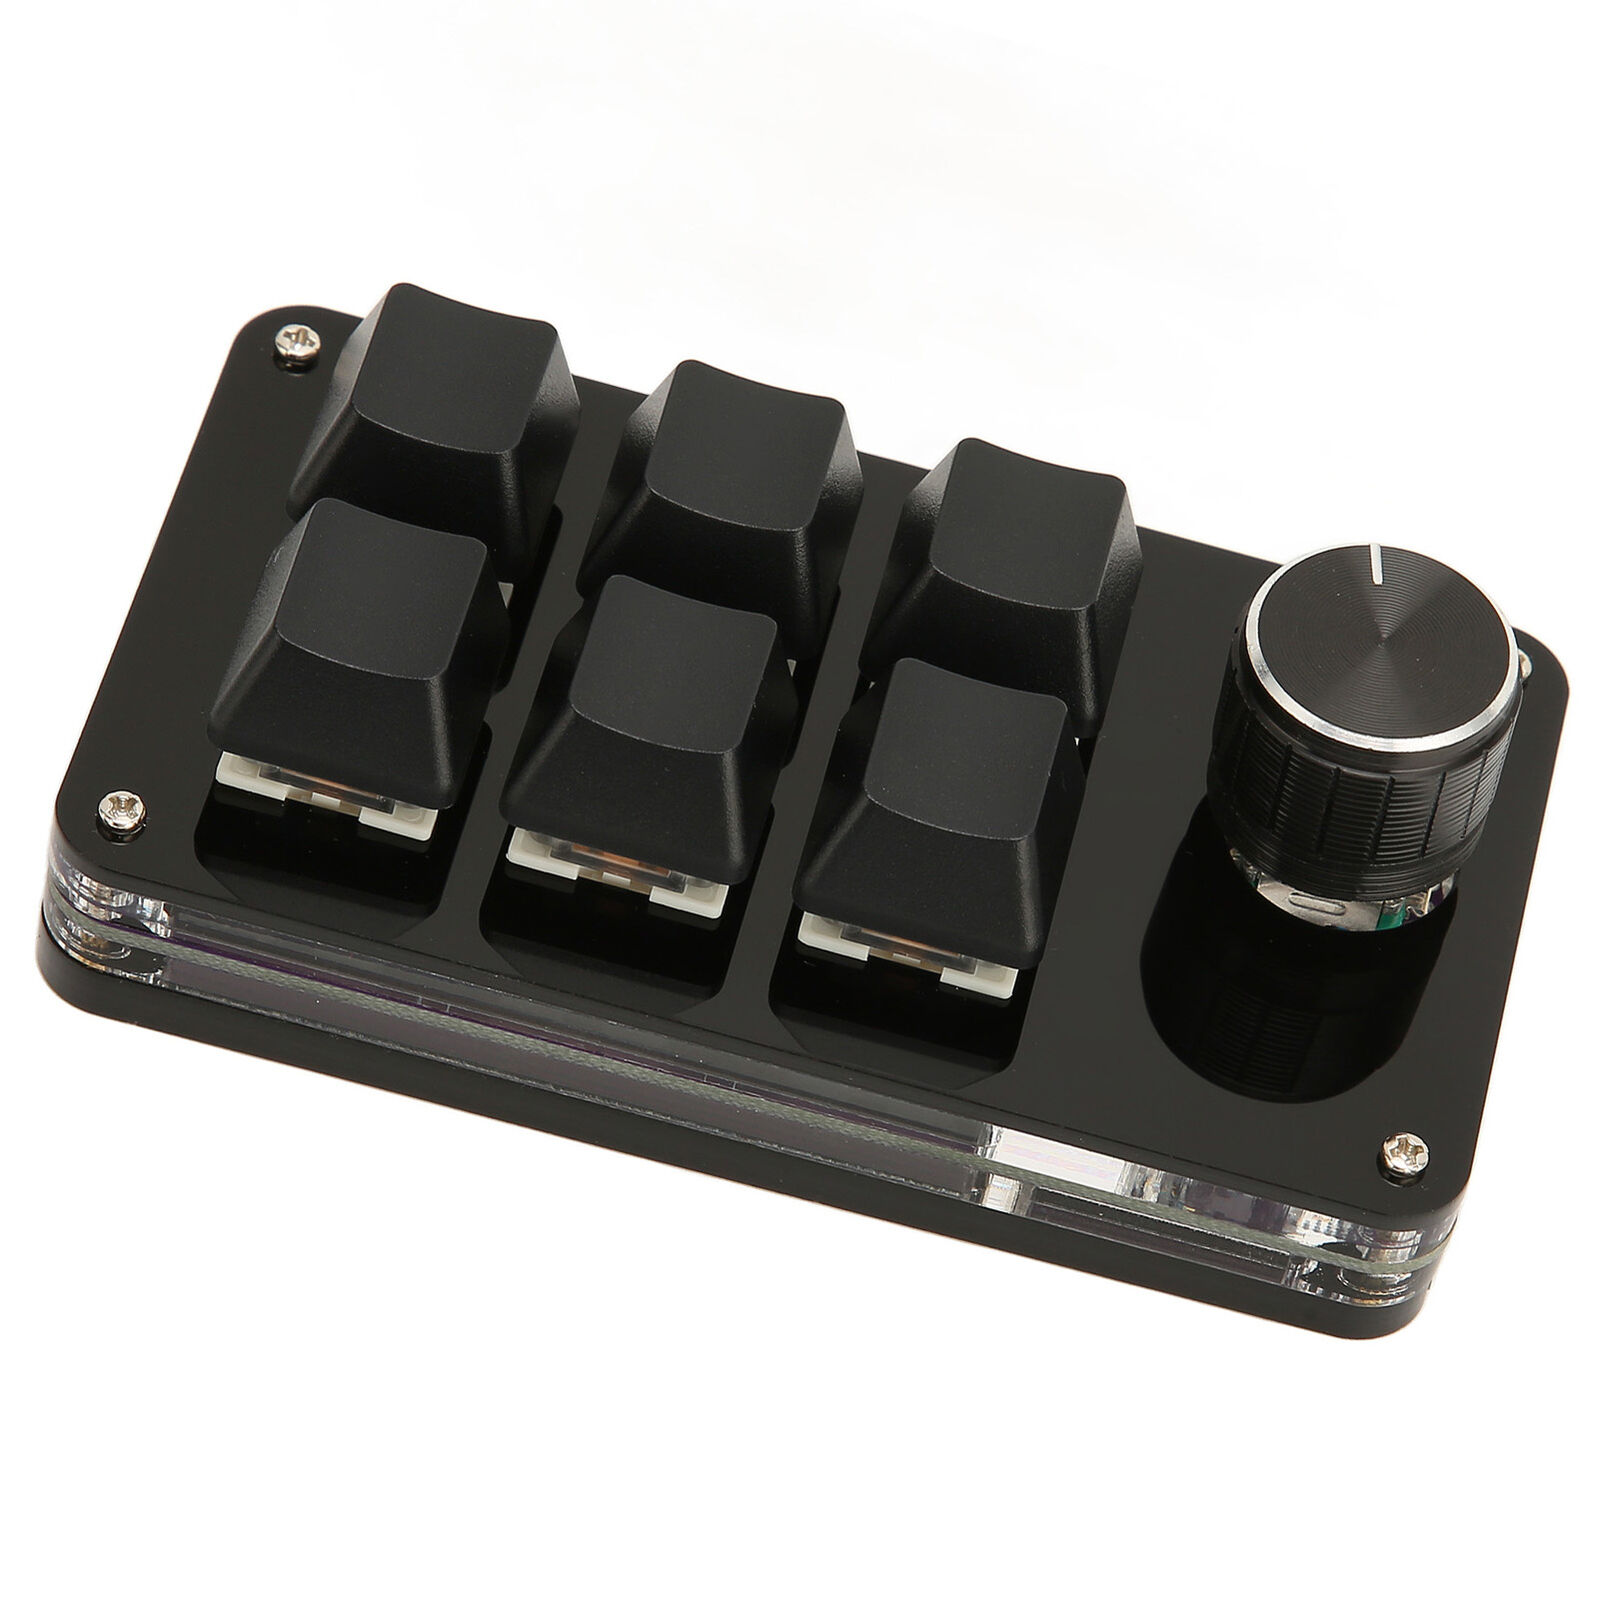 6 Key Mini Keypad With Knob USB DIY Programmable Keyboard OSU Gaming Keyboar BEA